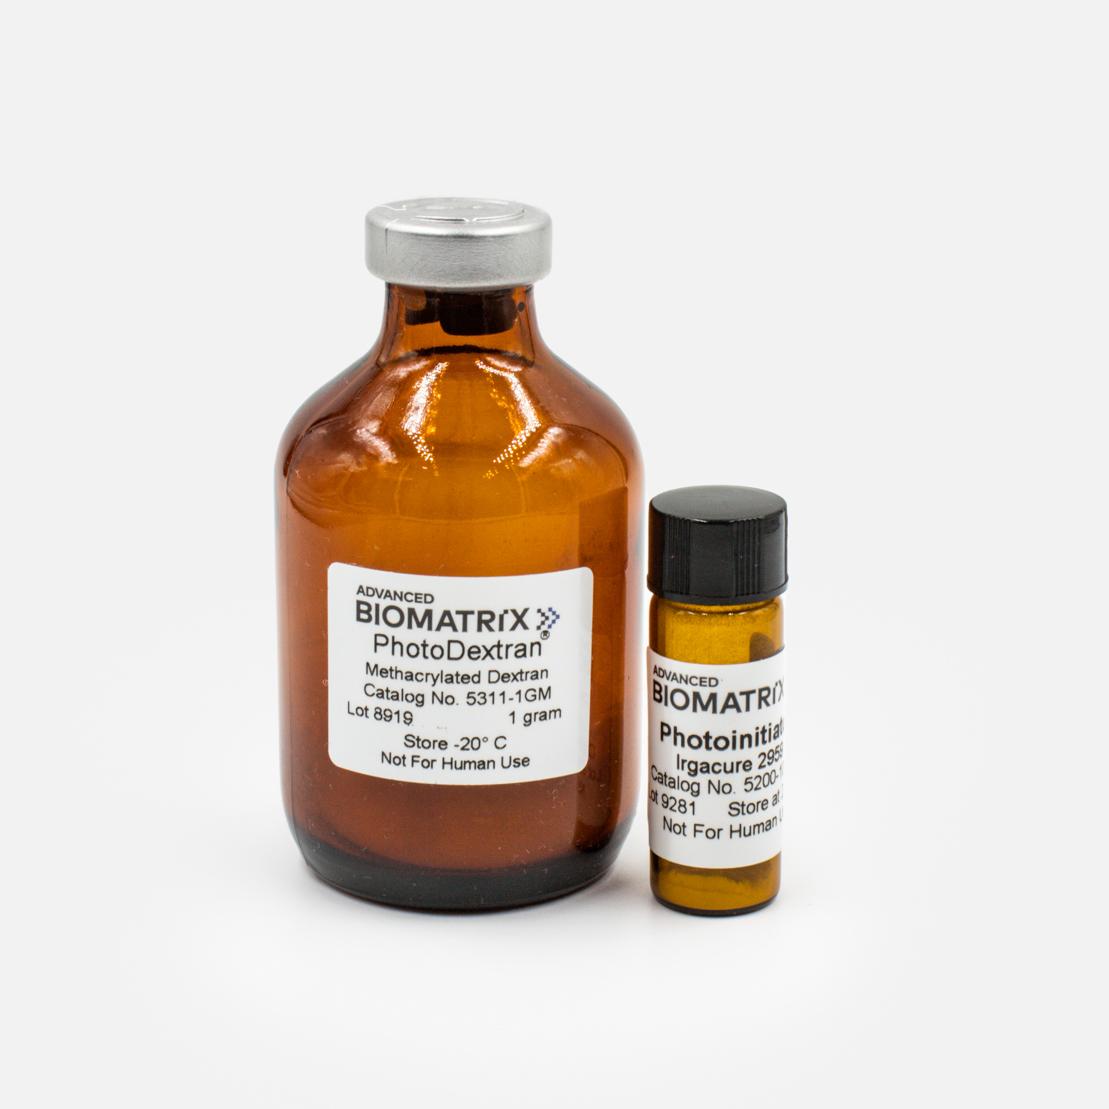 PhotoDextran Methacrylated Dextran with Irgacure